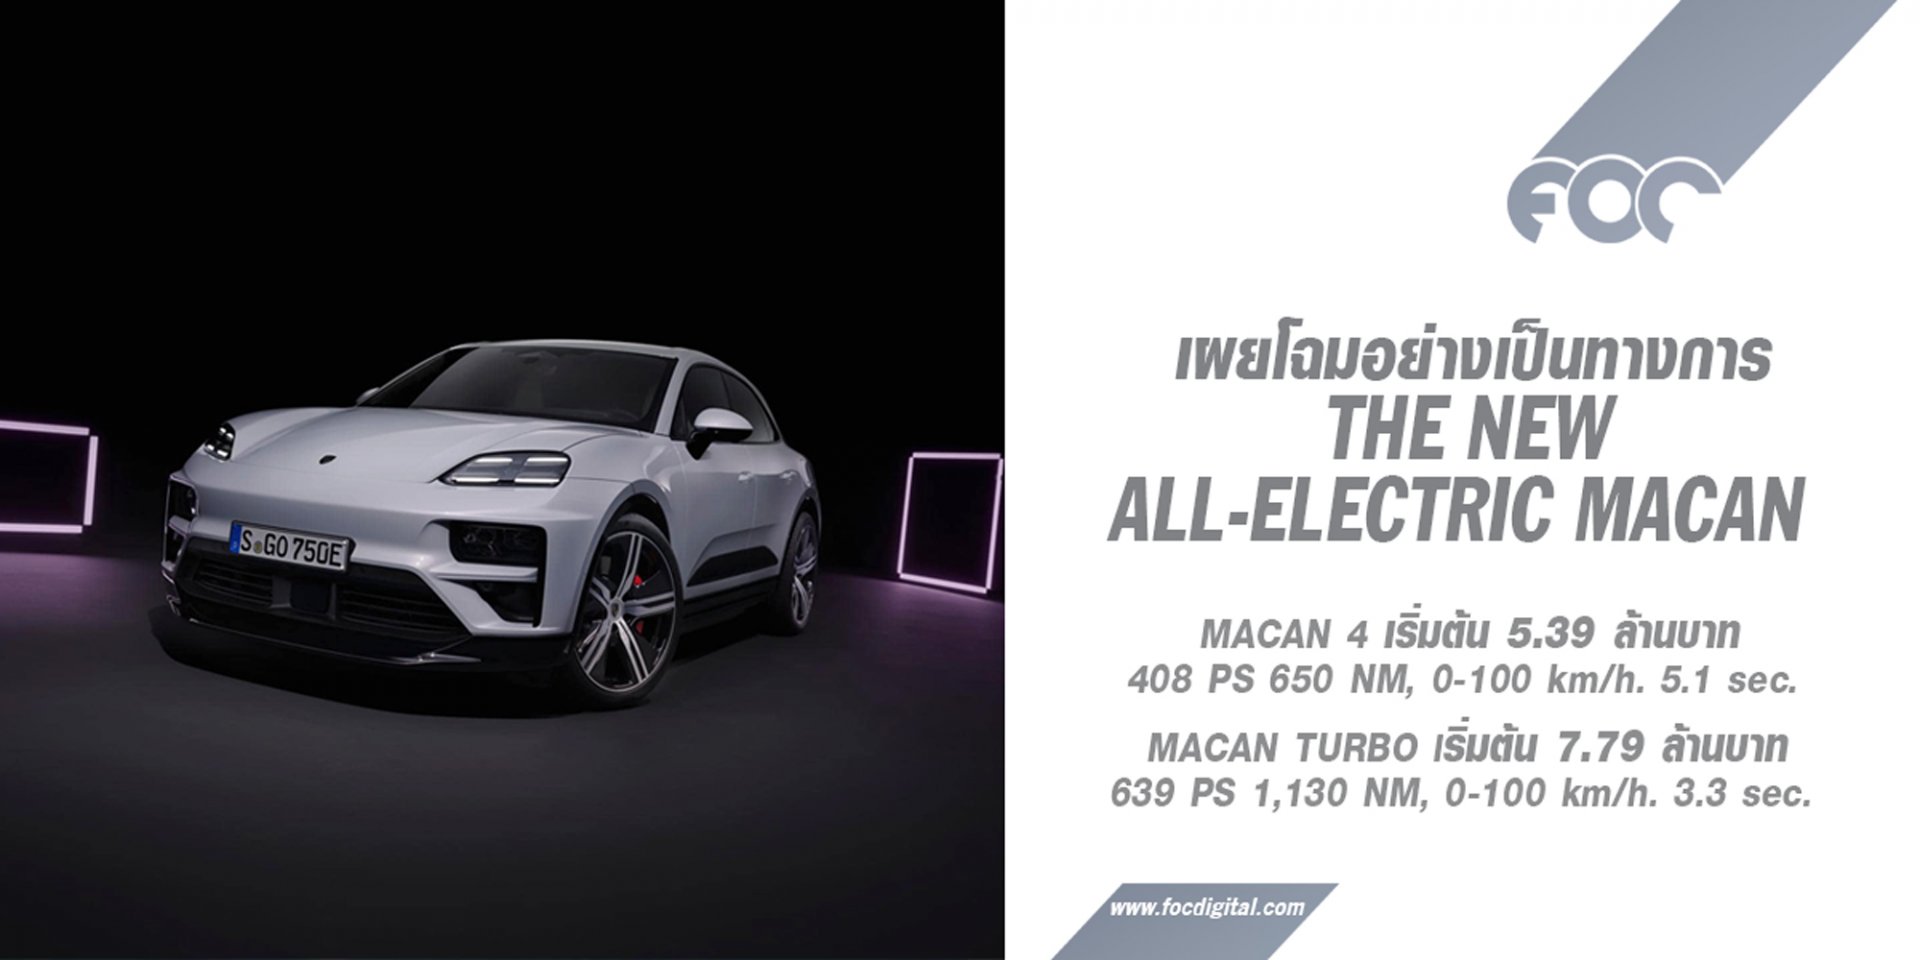 The New all-electric Macan พร้อมเปิดจองตั้งแต่วันนี้ Macan 4 เริ่มต้นที่ 5.39 ล้านบาท Macan Turbo เริ่มต้นที่ 7.79 ล้านบาท